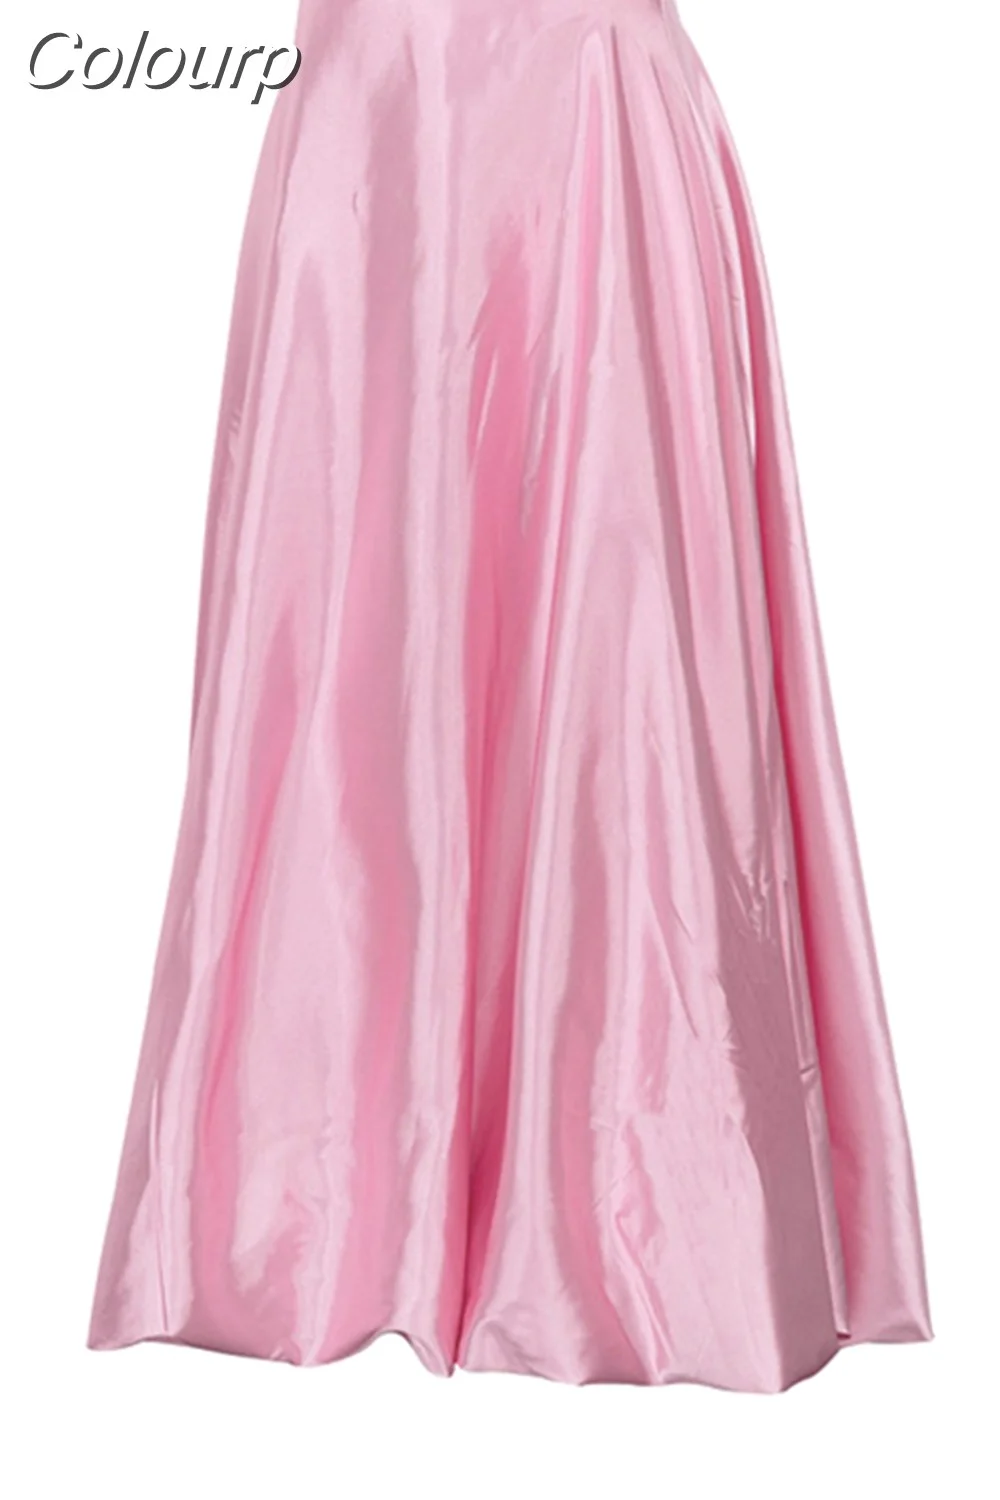 Colourp Spring Summer Women Satin High Waist A-line Drape Skirt Fashion Elegant Solid Color Zipper Simple French Tutu Skirts